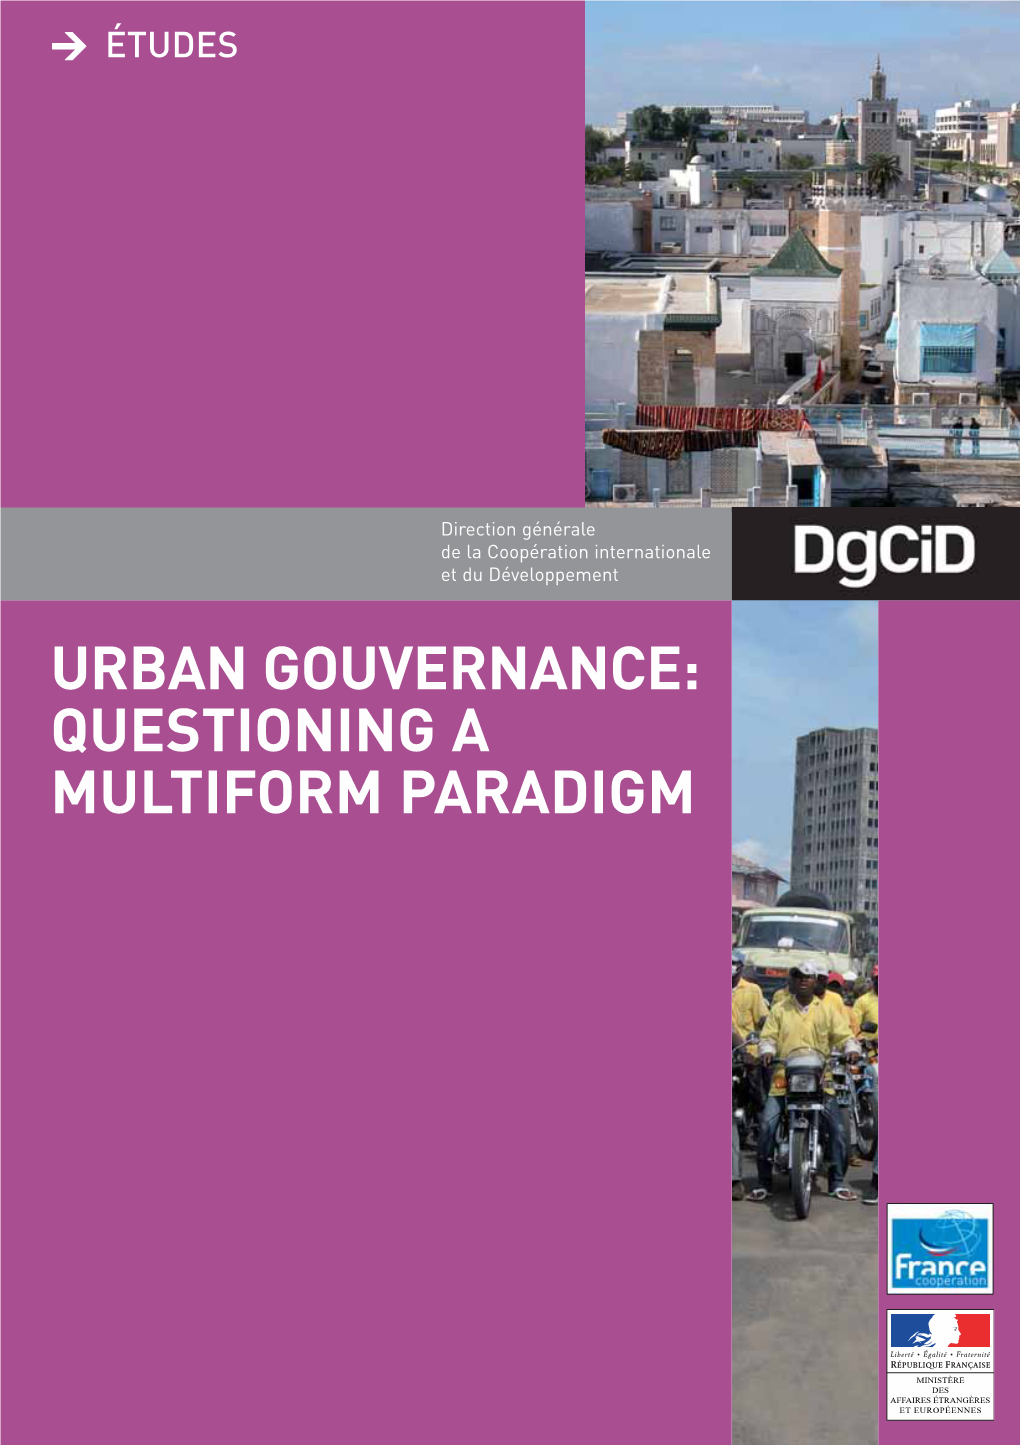 URBAN GOUVERNANCE: QUESTIONING a MULTIFORM PARADIGM 684 Int-Gouvernance GB 30/10/08 11:11 Page 1